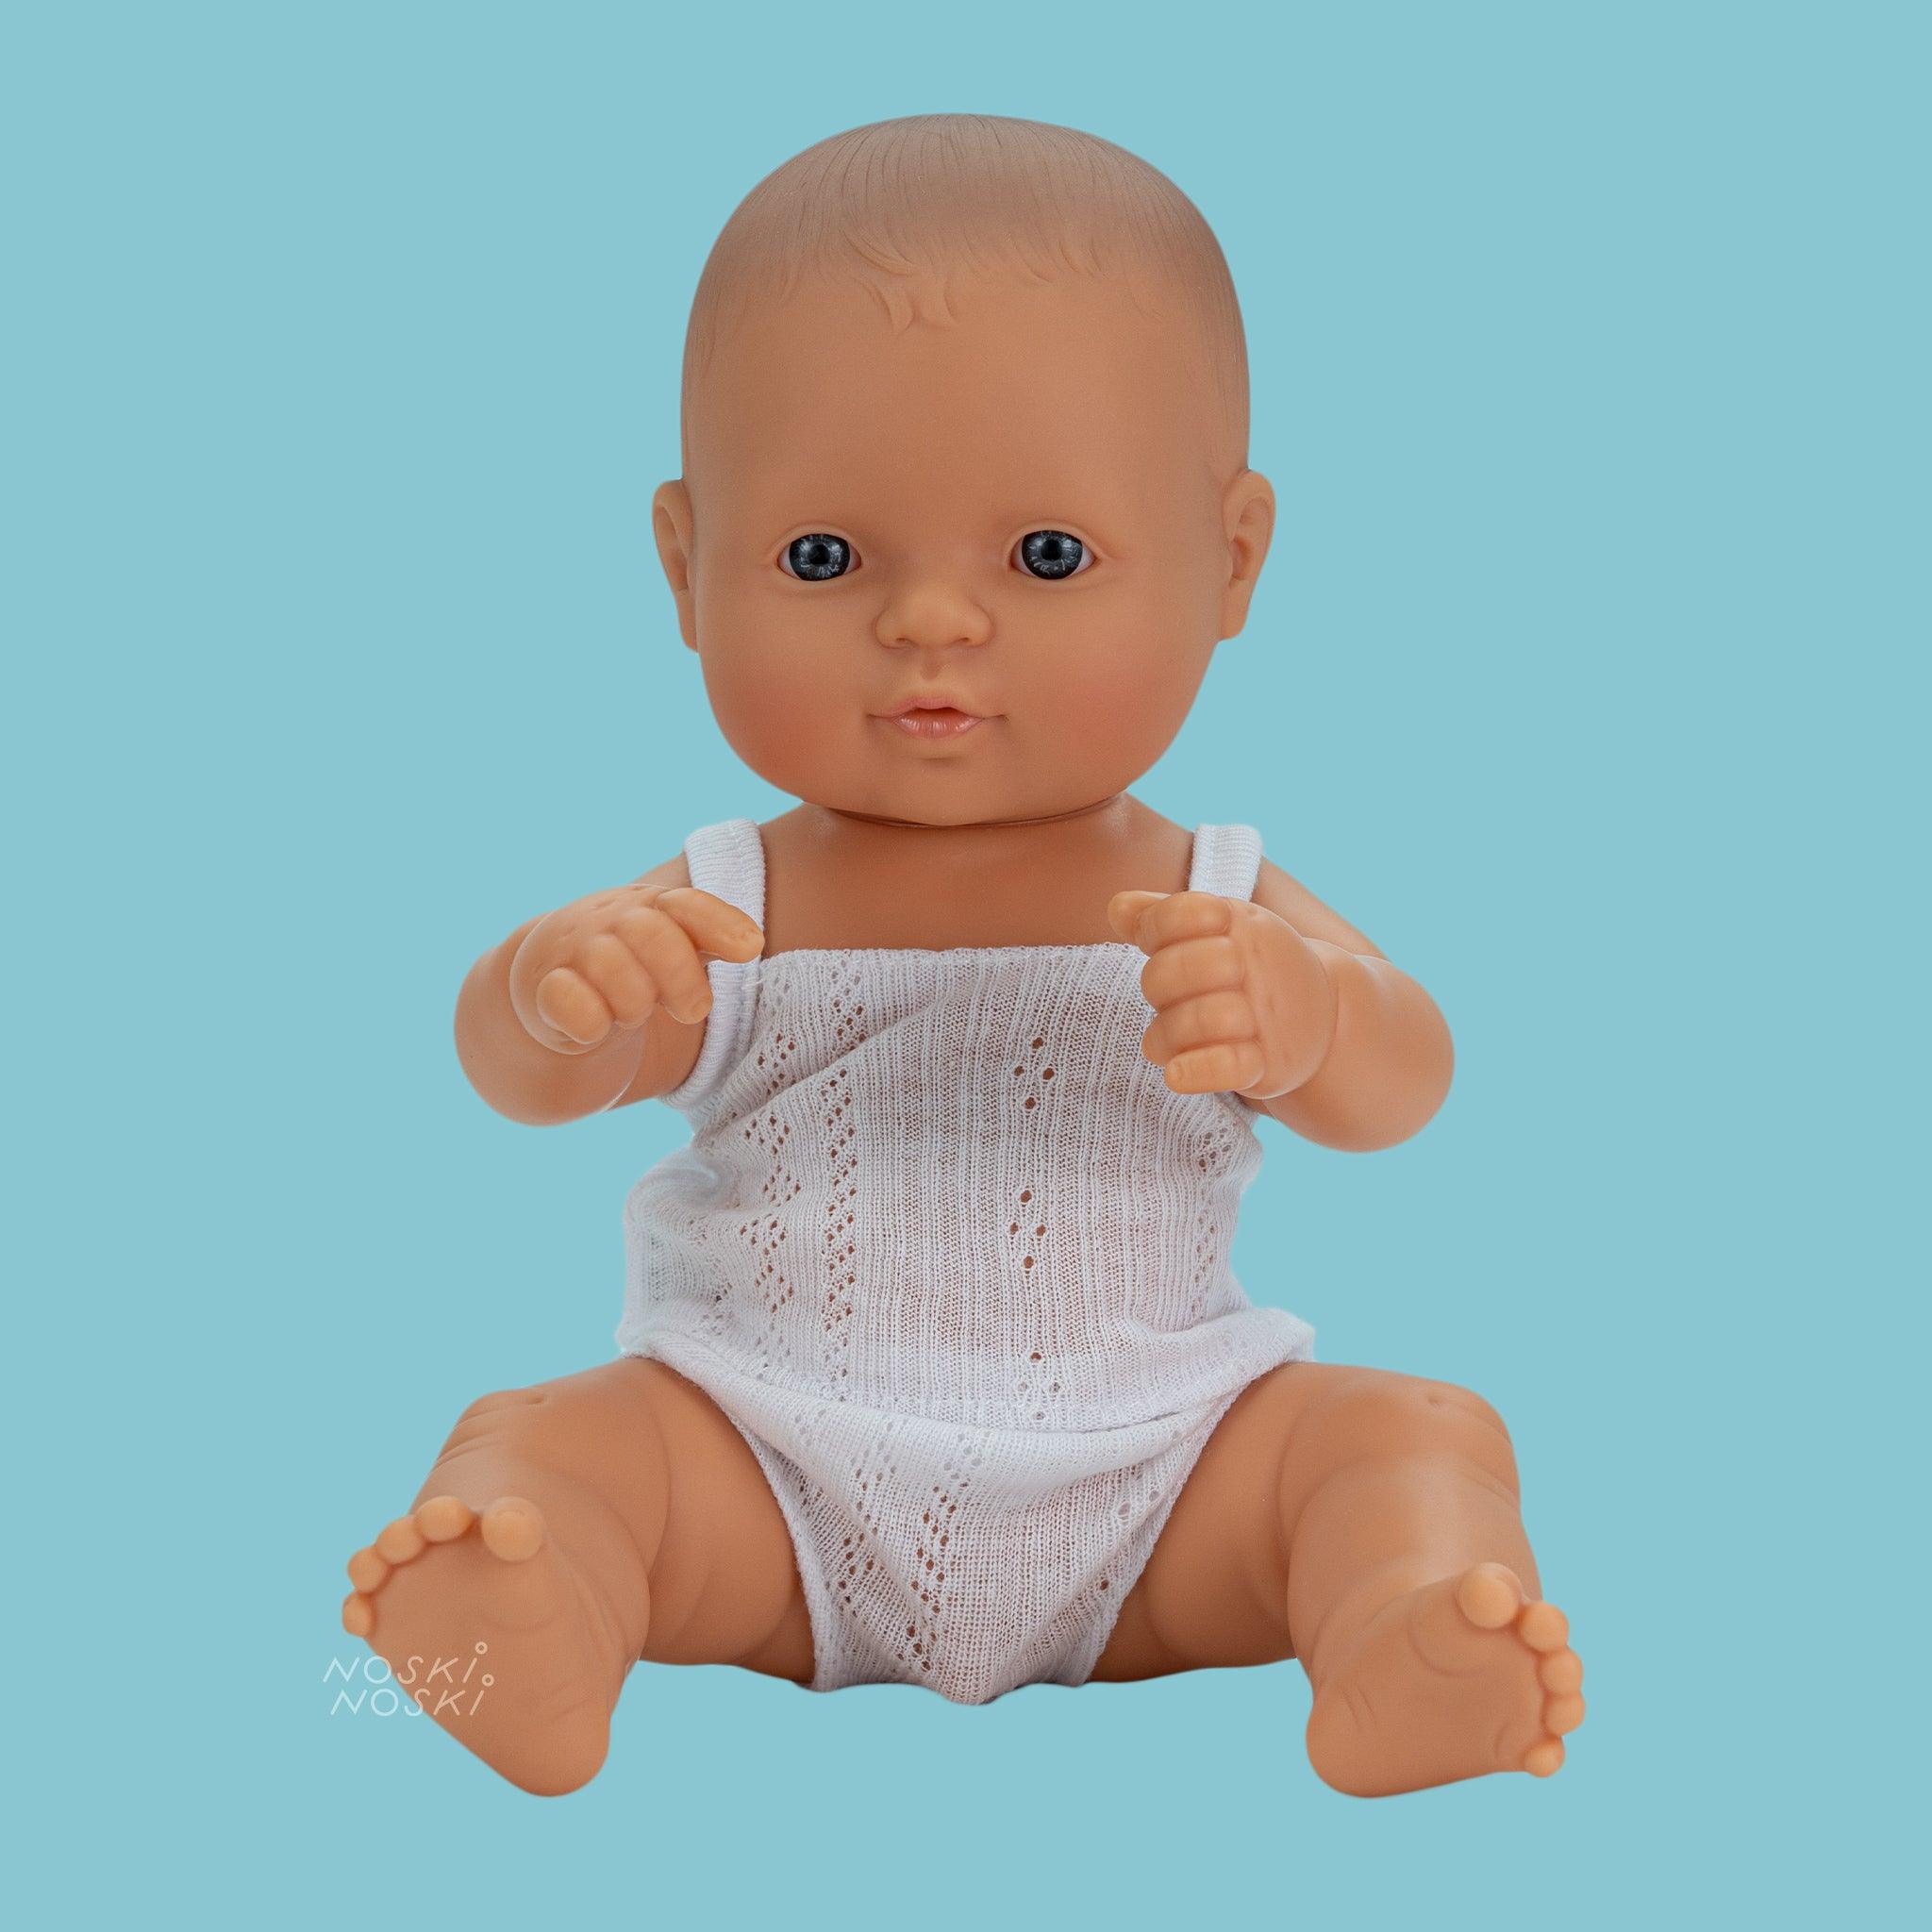 Miniland: Baby Jungen europäische Puppe 32 cm